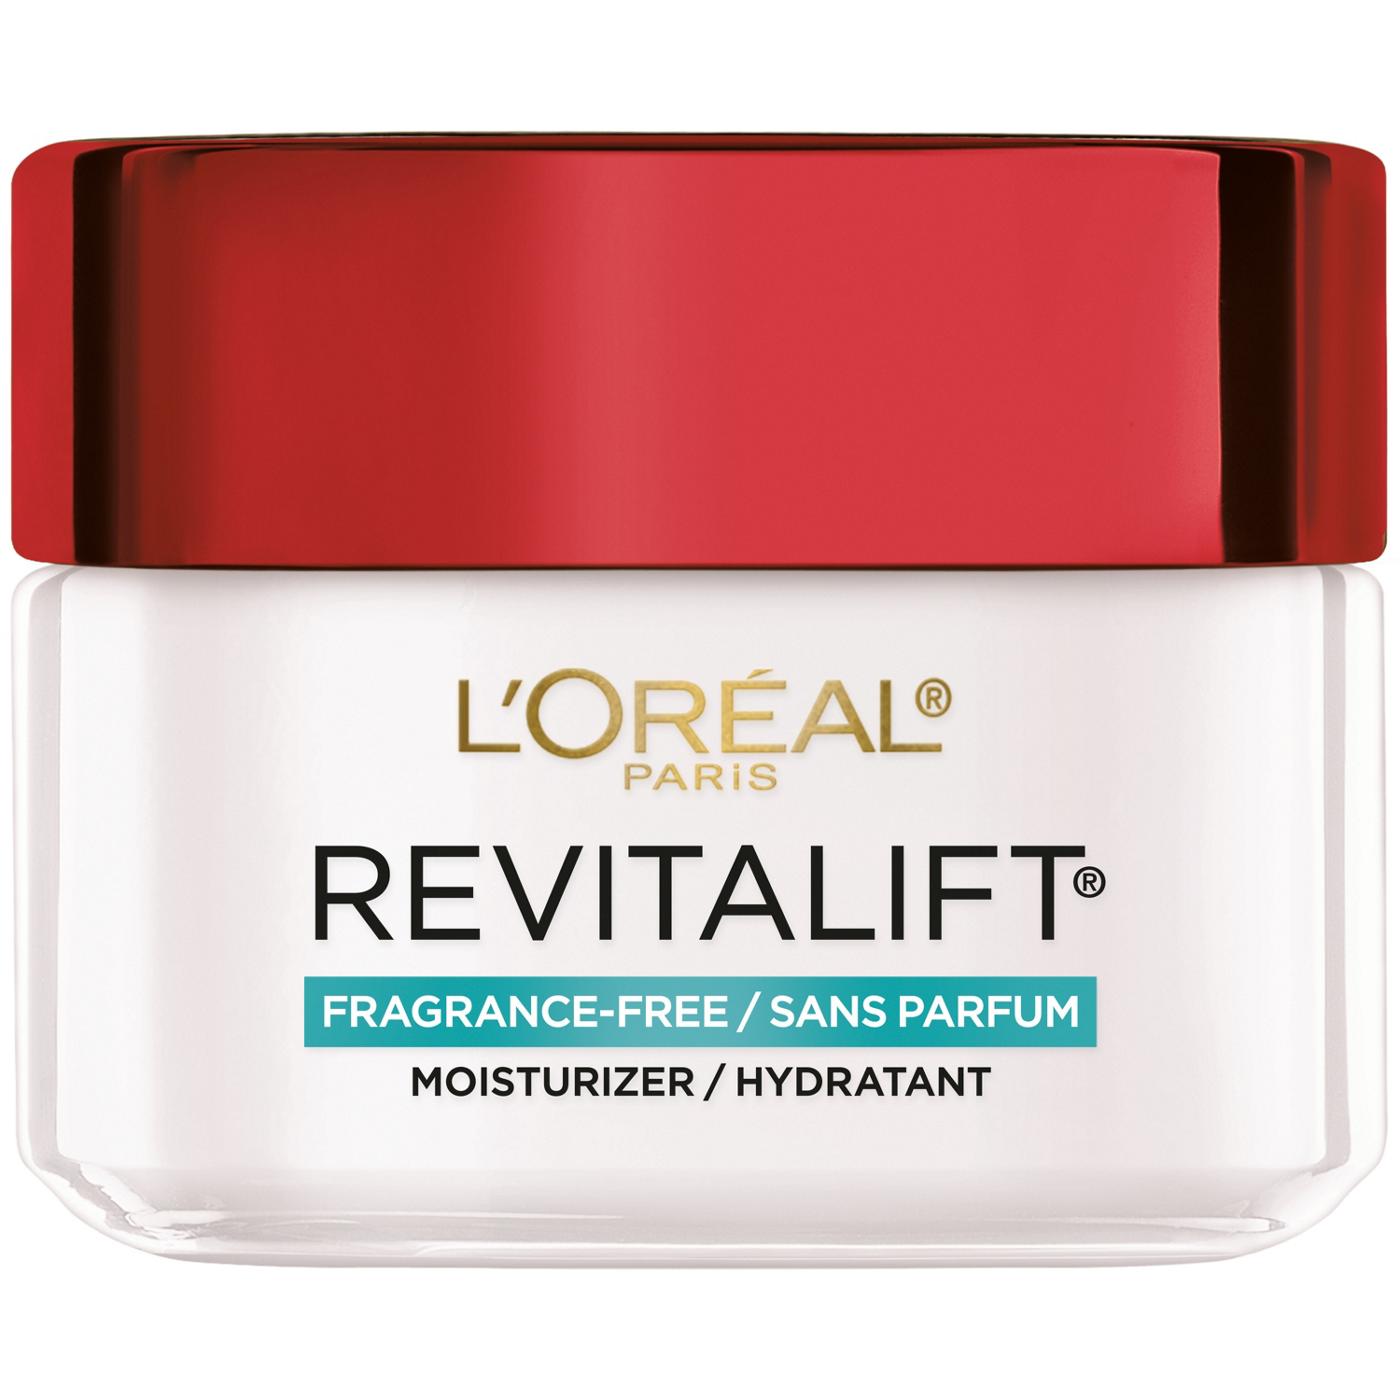 L'Oréal Paris Revitalift Anti-Aging Face and Neck Cream Fragrance Free; image 4 of 8